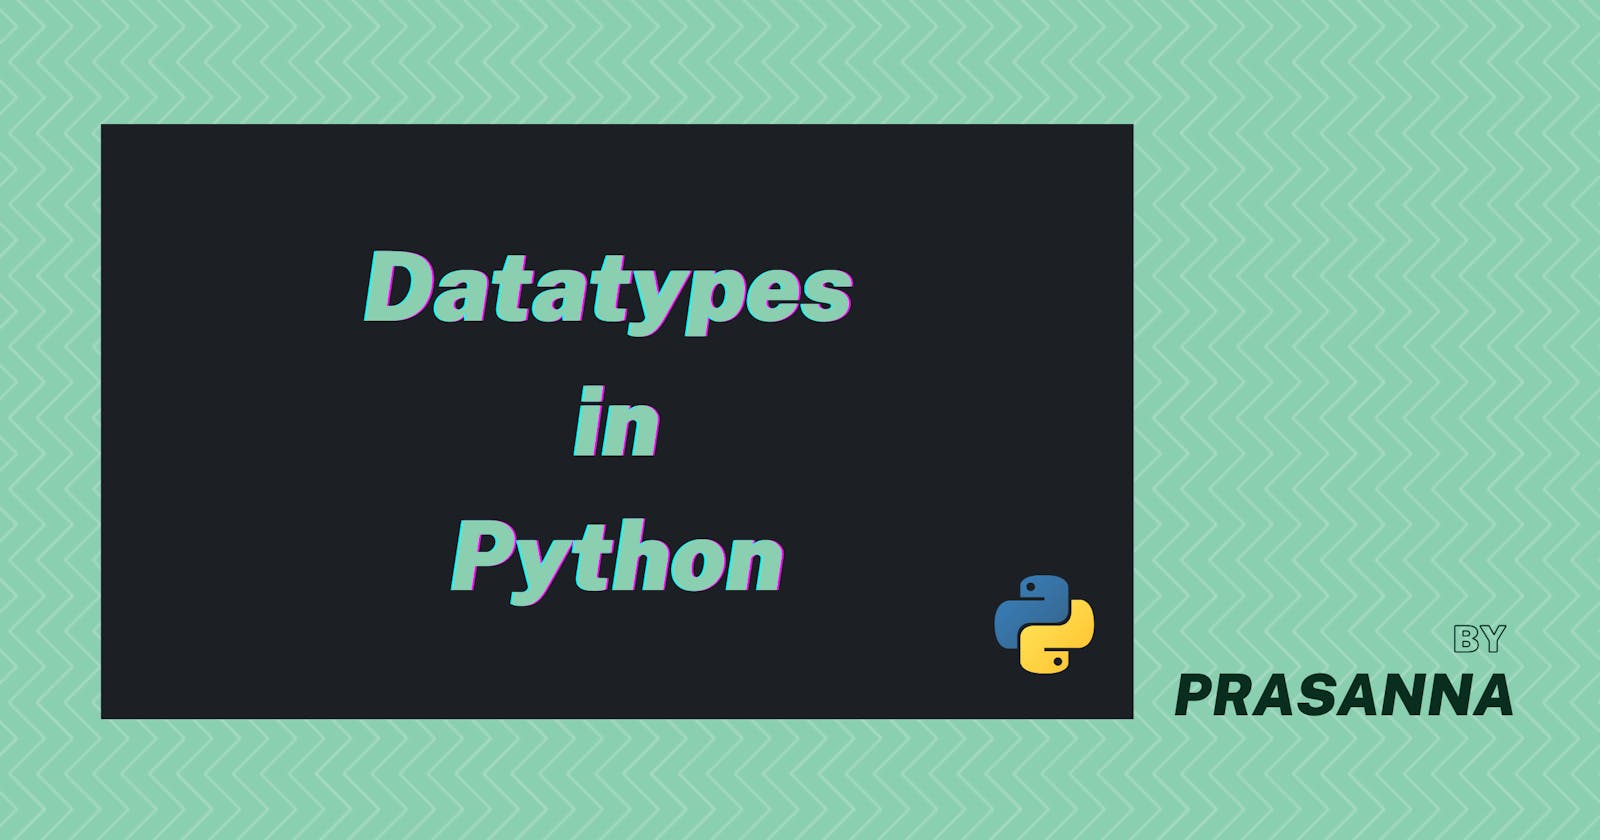 Datatypes in Python